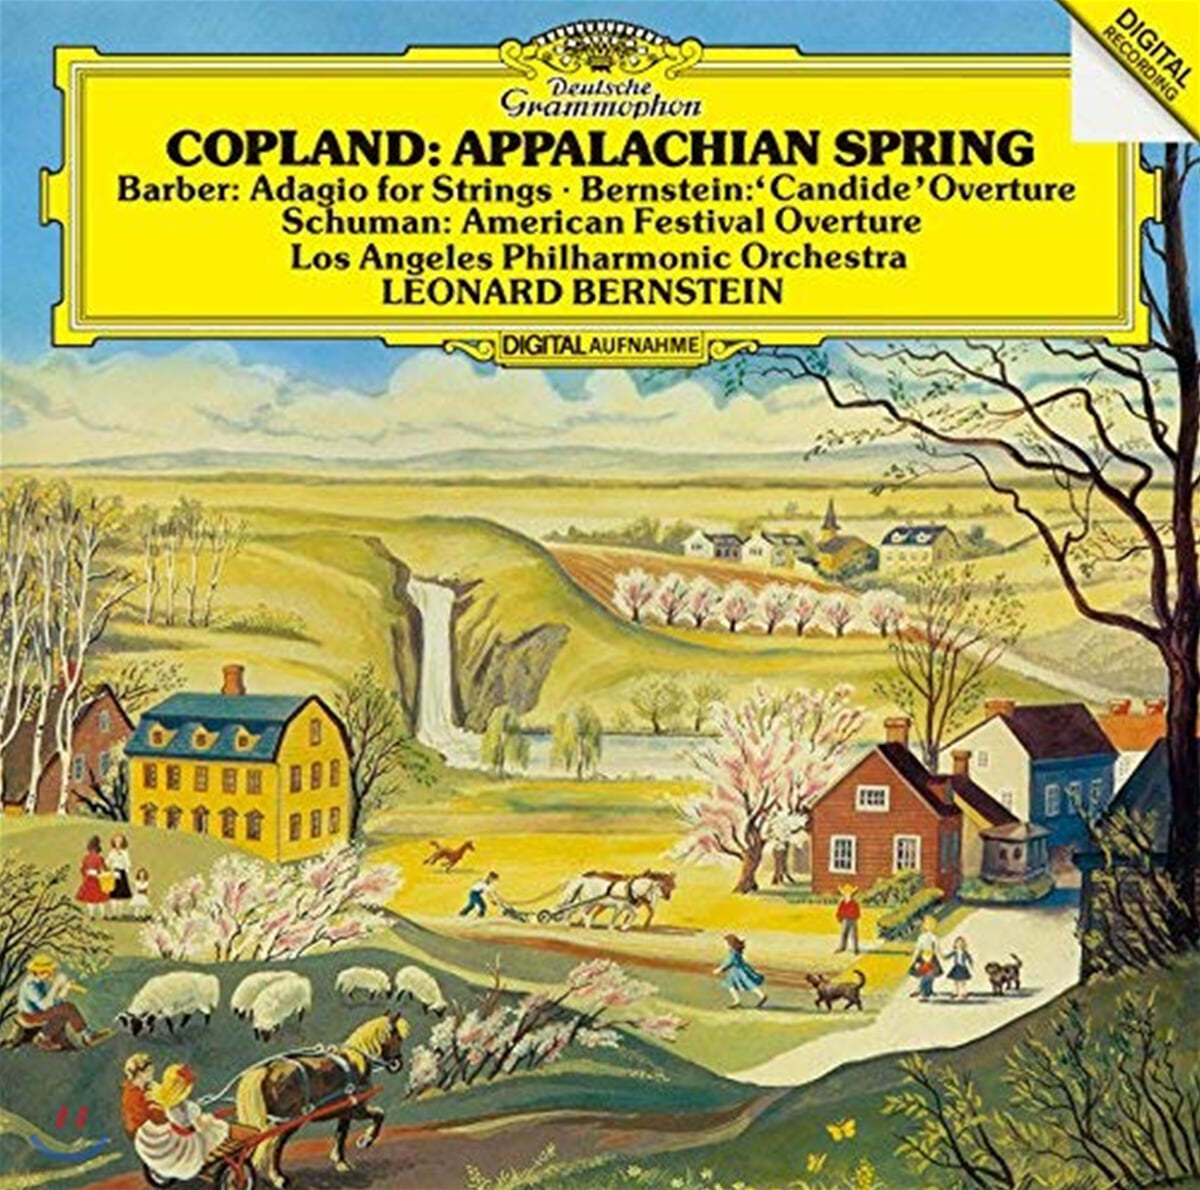 Leonard Bernstein 코플랜드: 아팔라치아의 봄 / 바버: 현을 위한 아다지오 / 레너드 번스타인: 캔디드 서곡